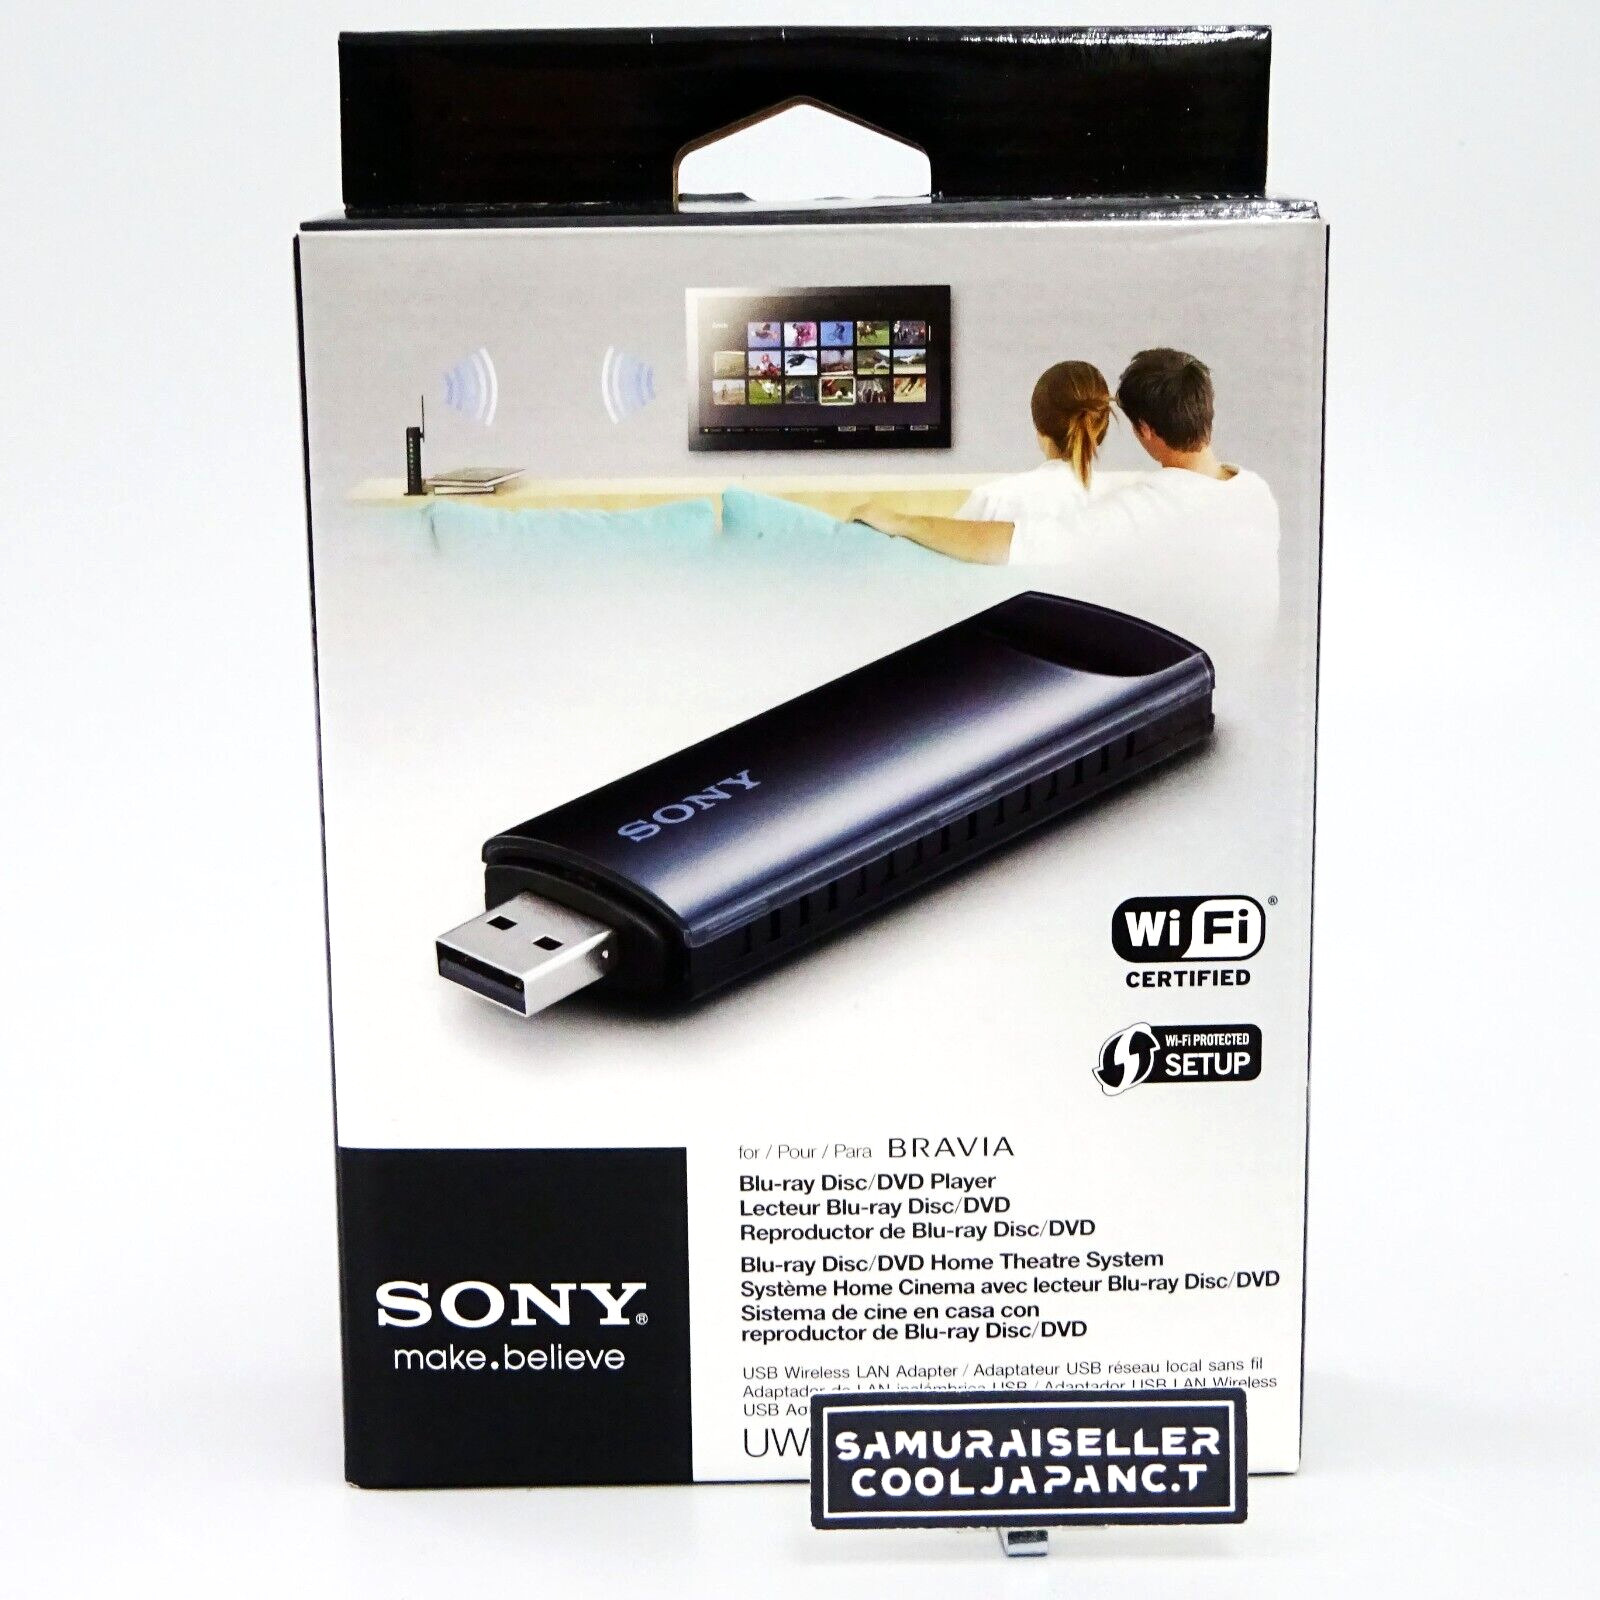 SONY BRAVIA USB wireless LAN adapter UWA-BR100 Japan Import NEW